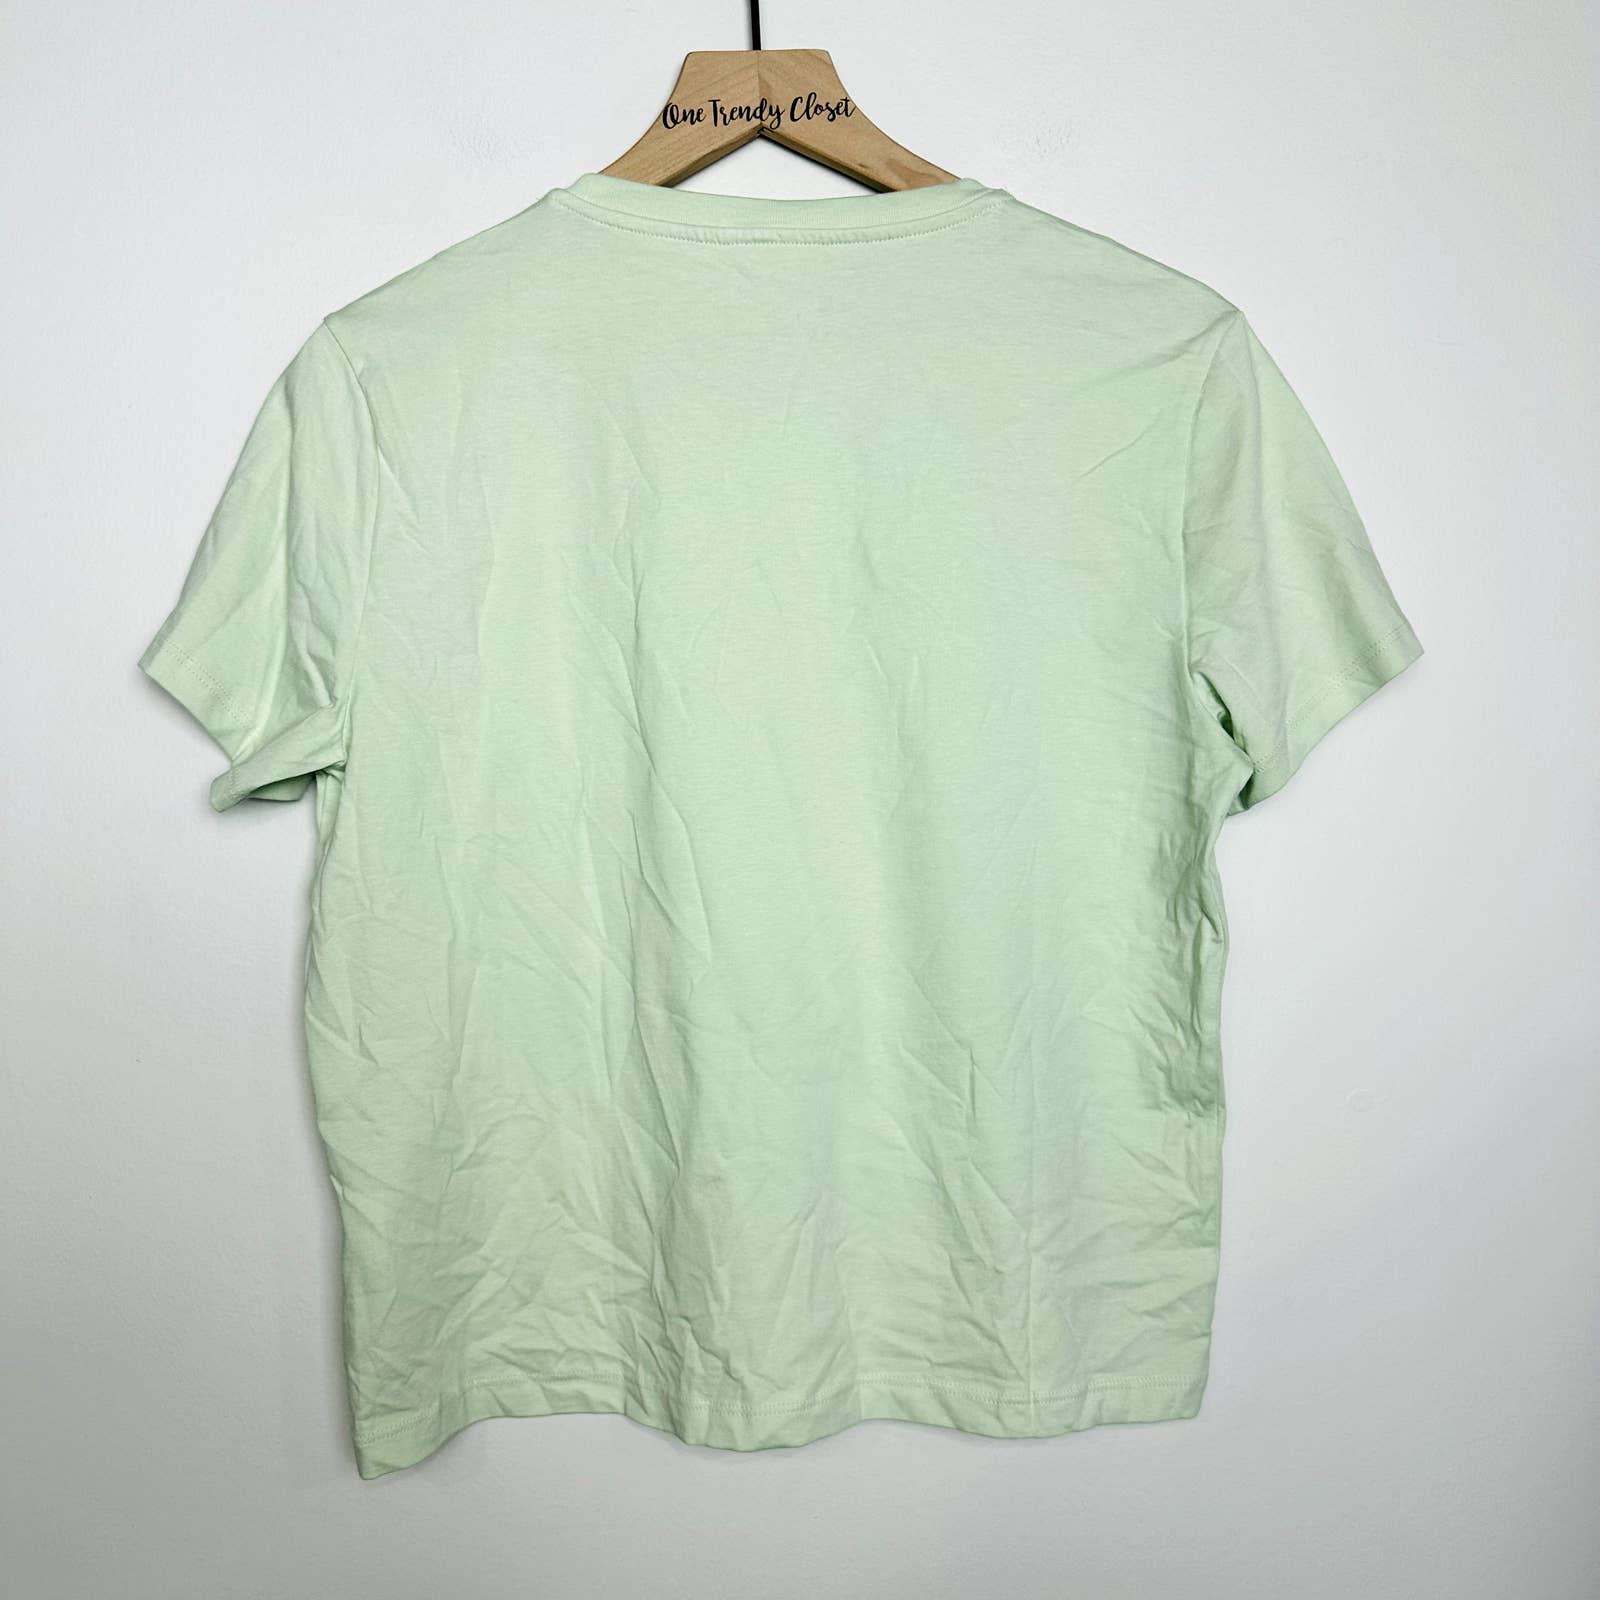 Everlane NWOT The Organic Cotton Pocket Boxy Classic Tee Shirt Green Size Medium